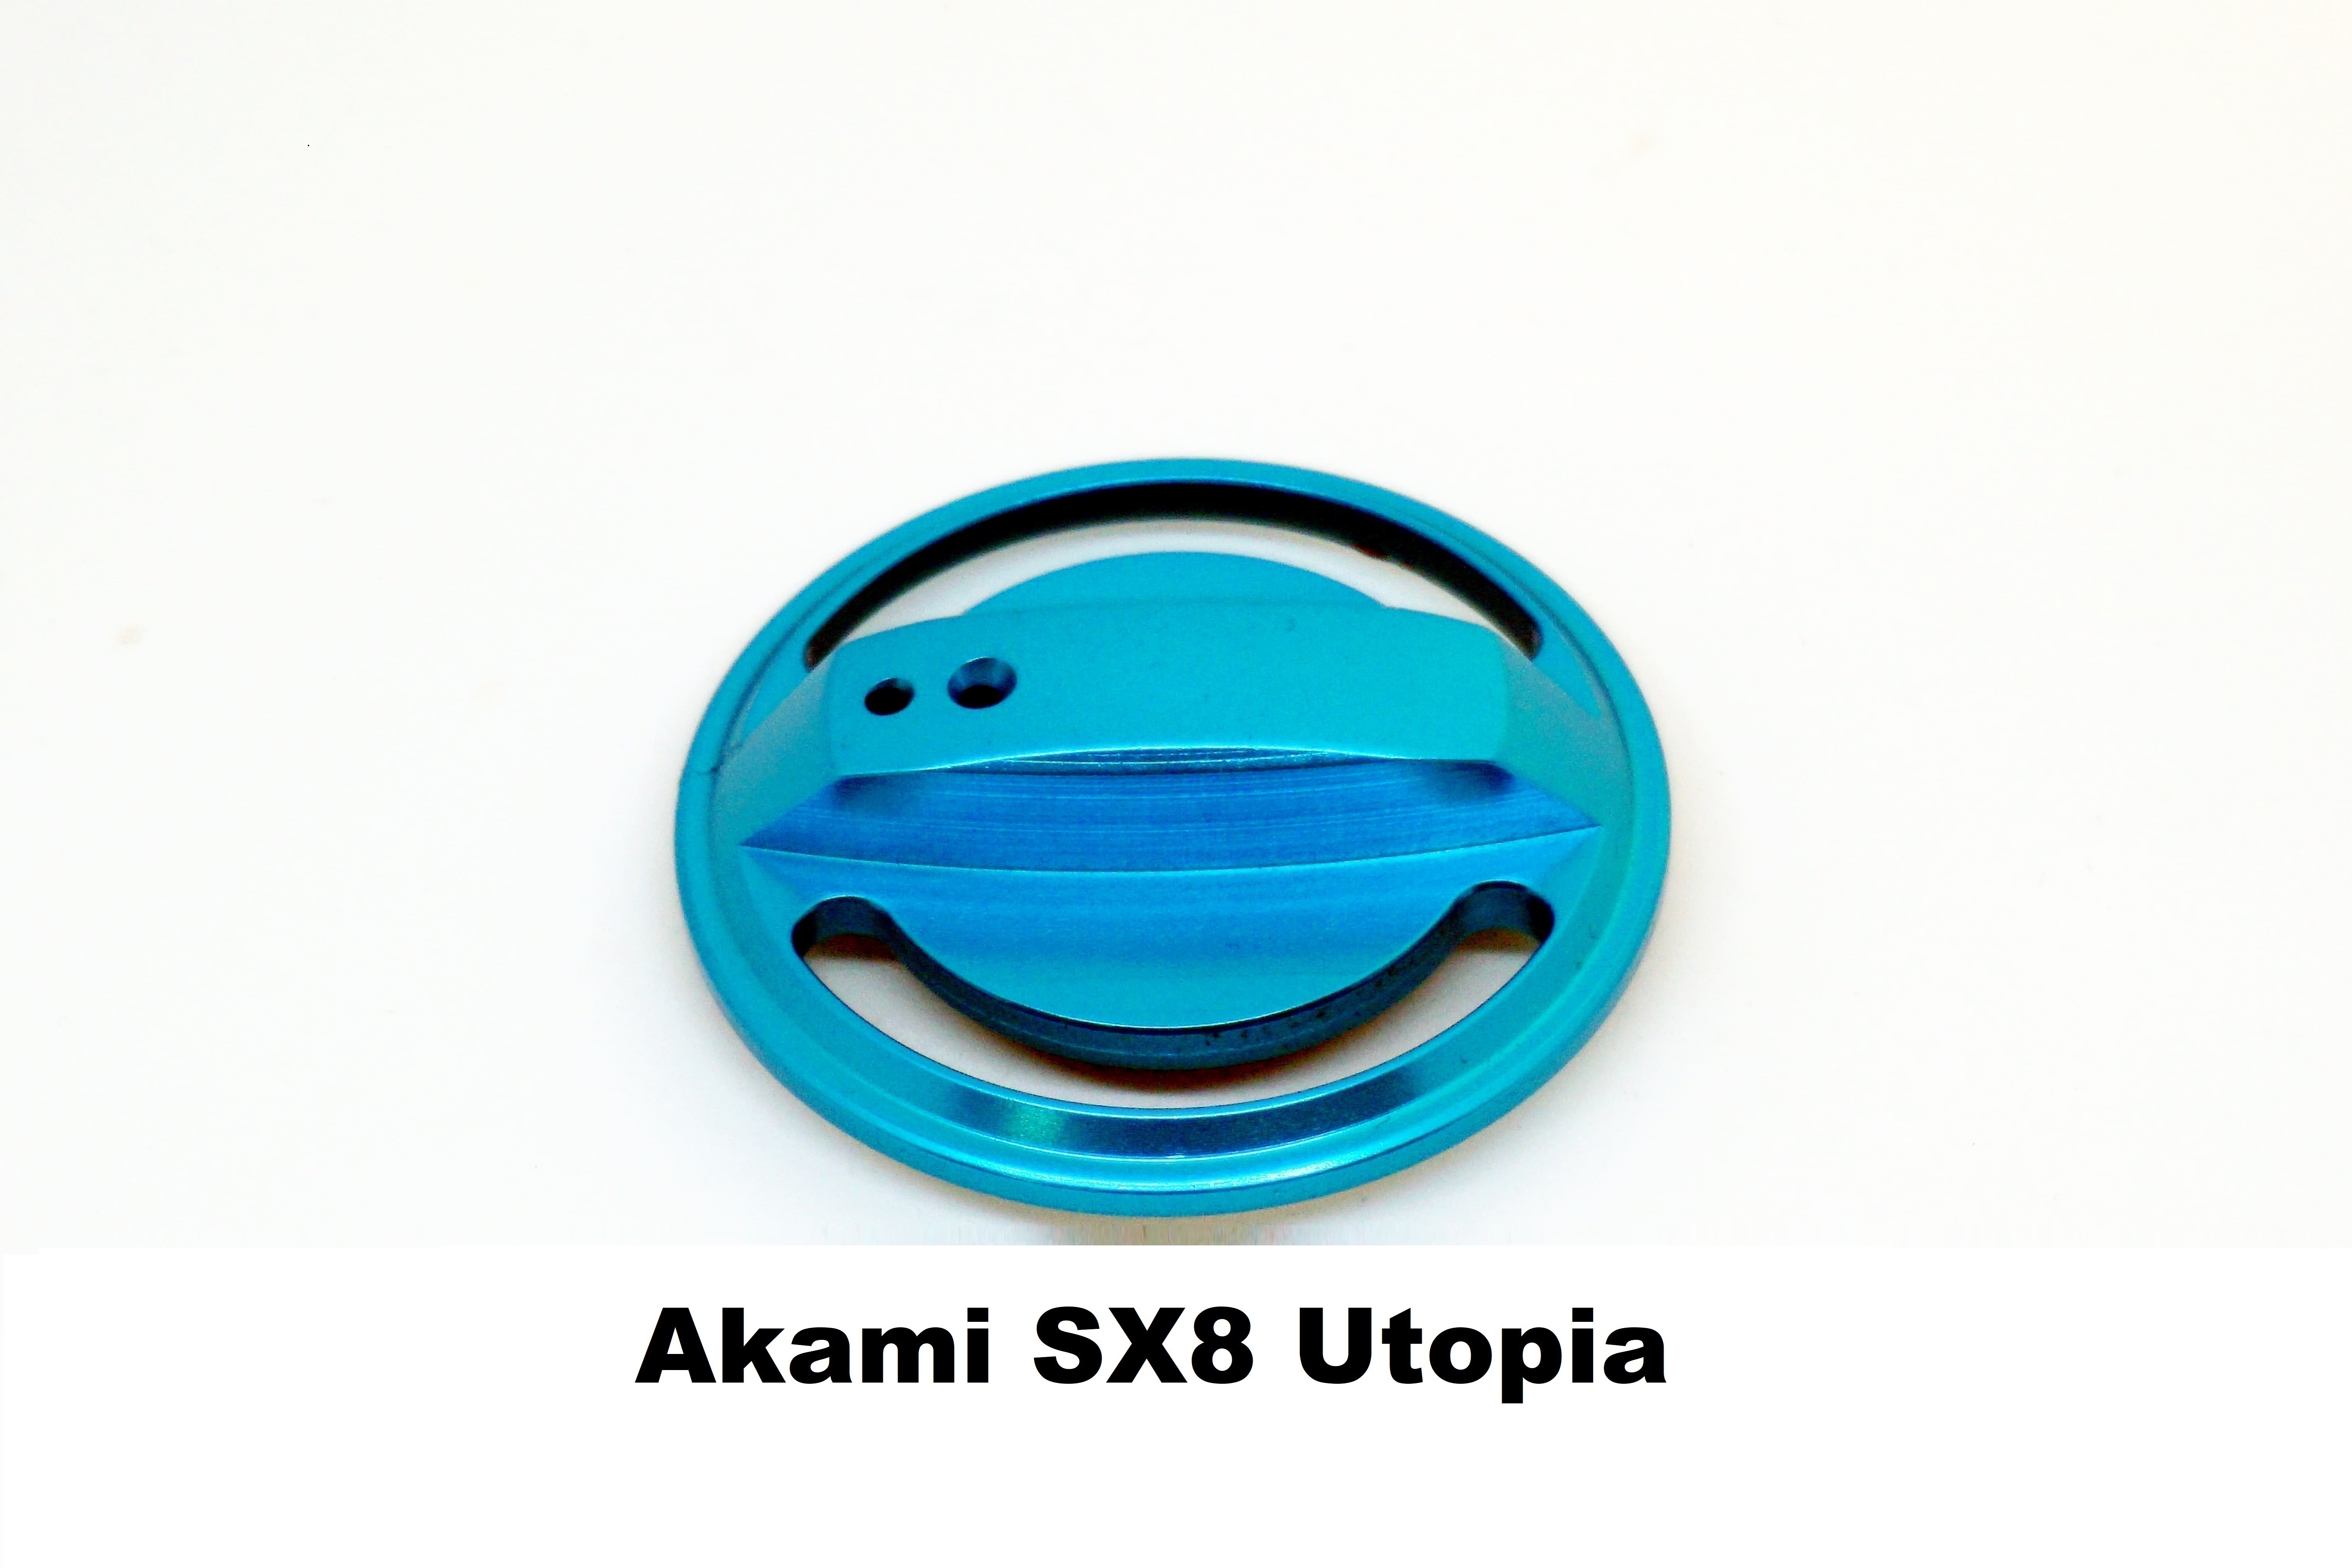 Drag Knob for Akami SX8 Utopia